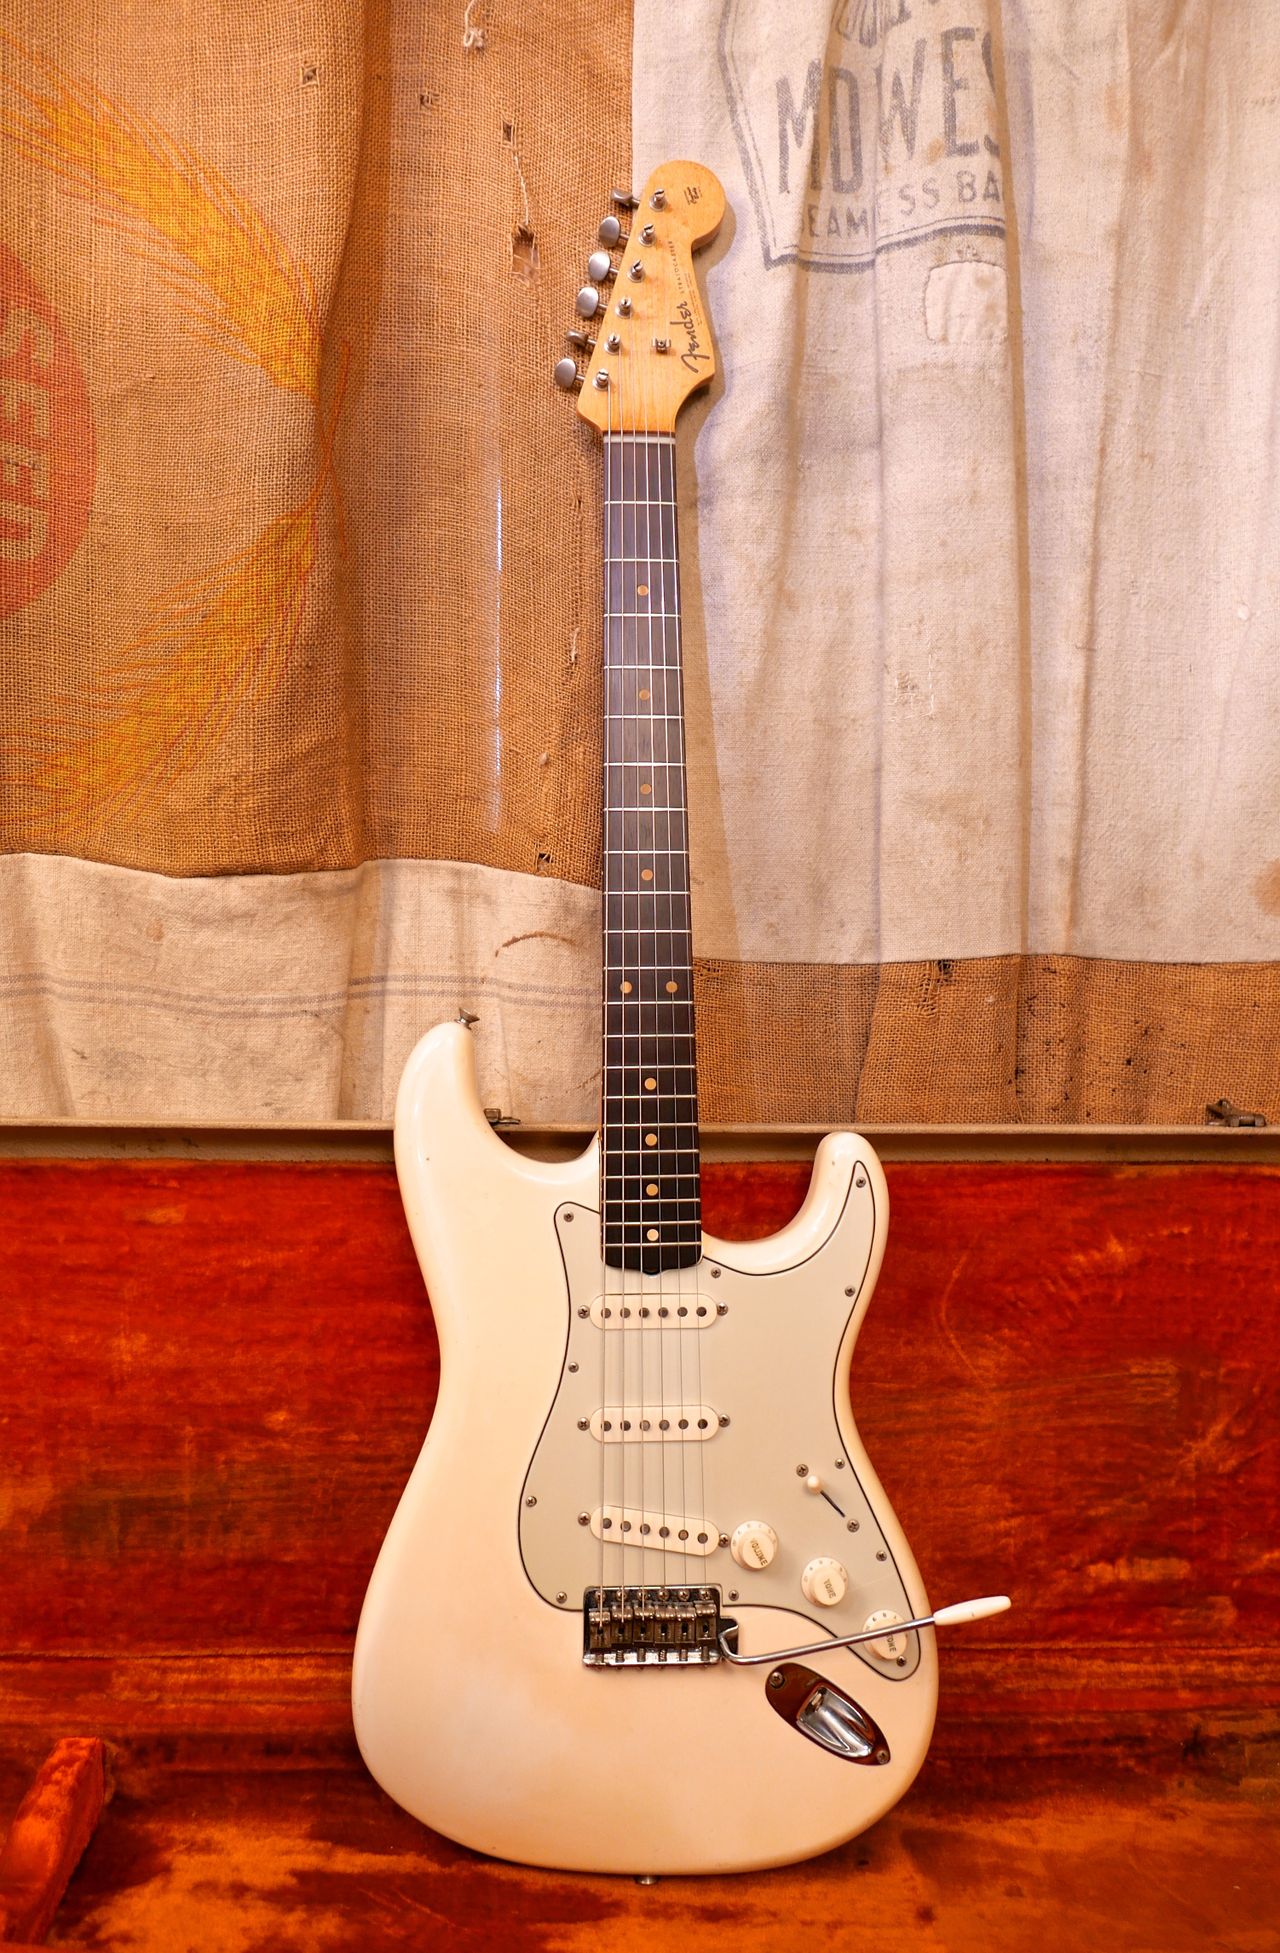 plan de estudios Arrestar instalaciones Fender Stratocaster 1962 - Olympic White | Carter Vintage Guitars